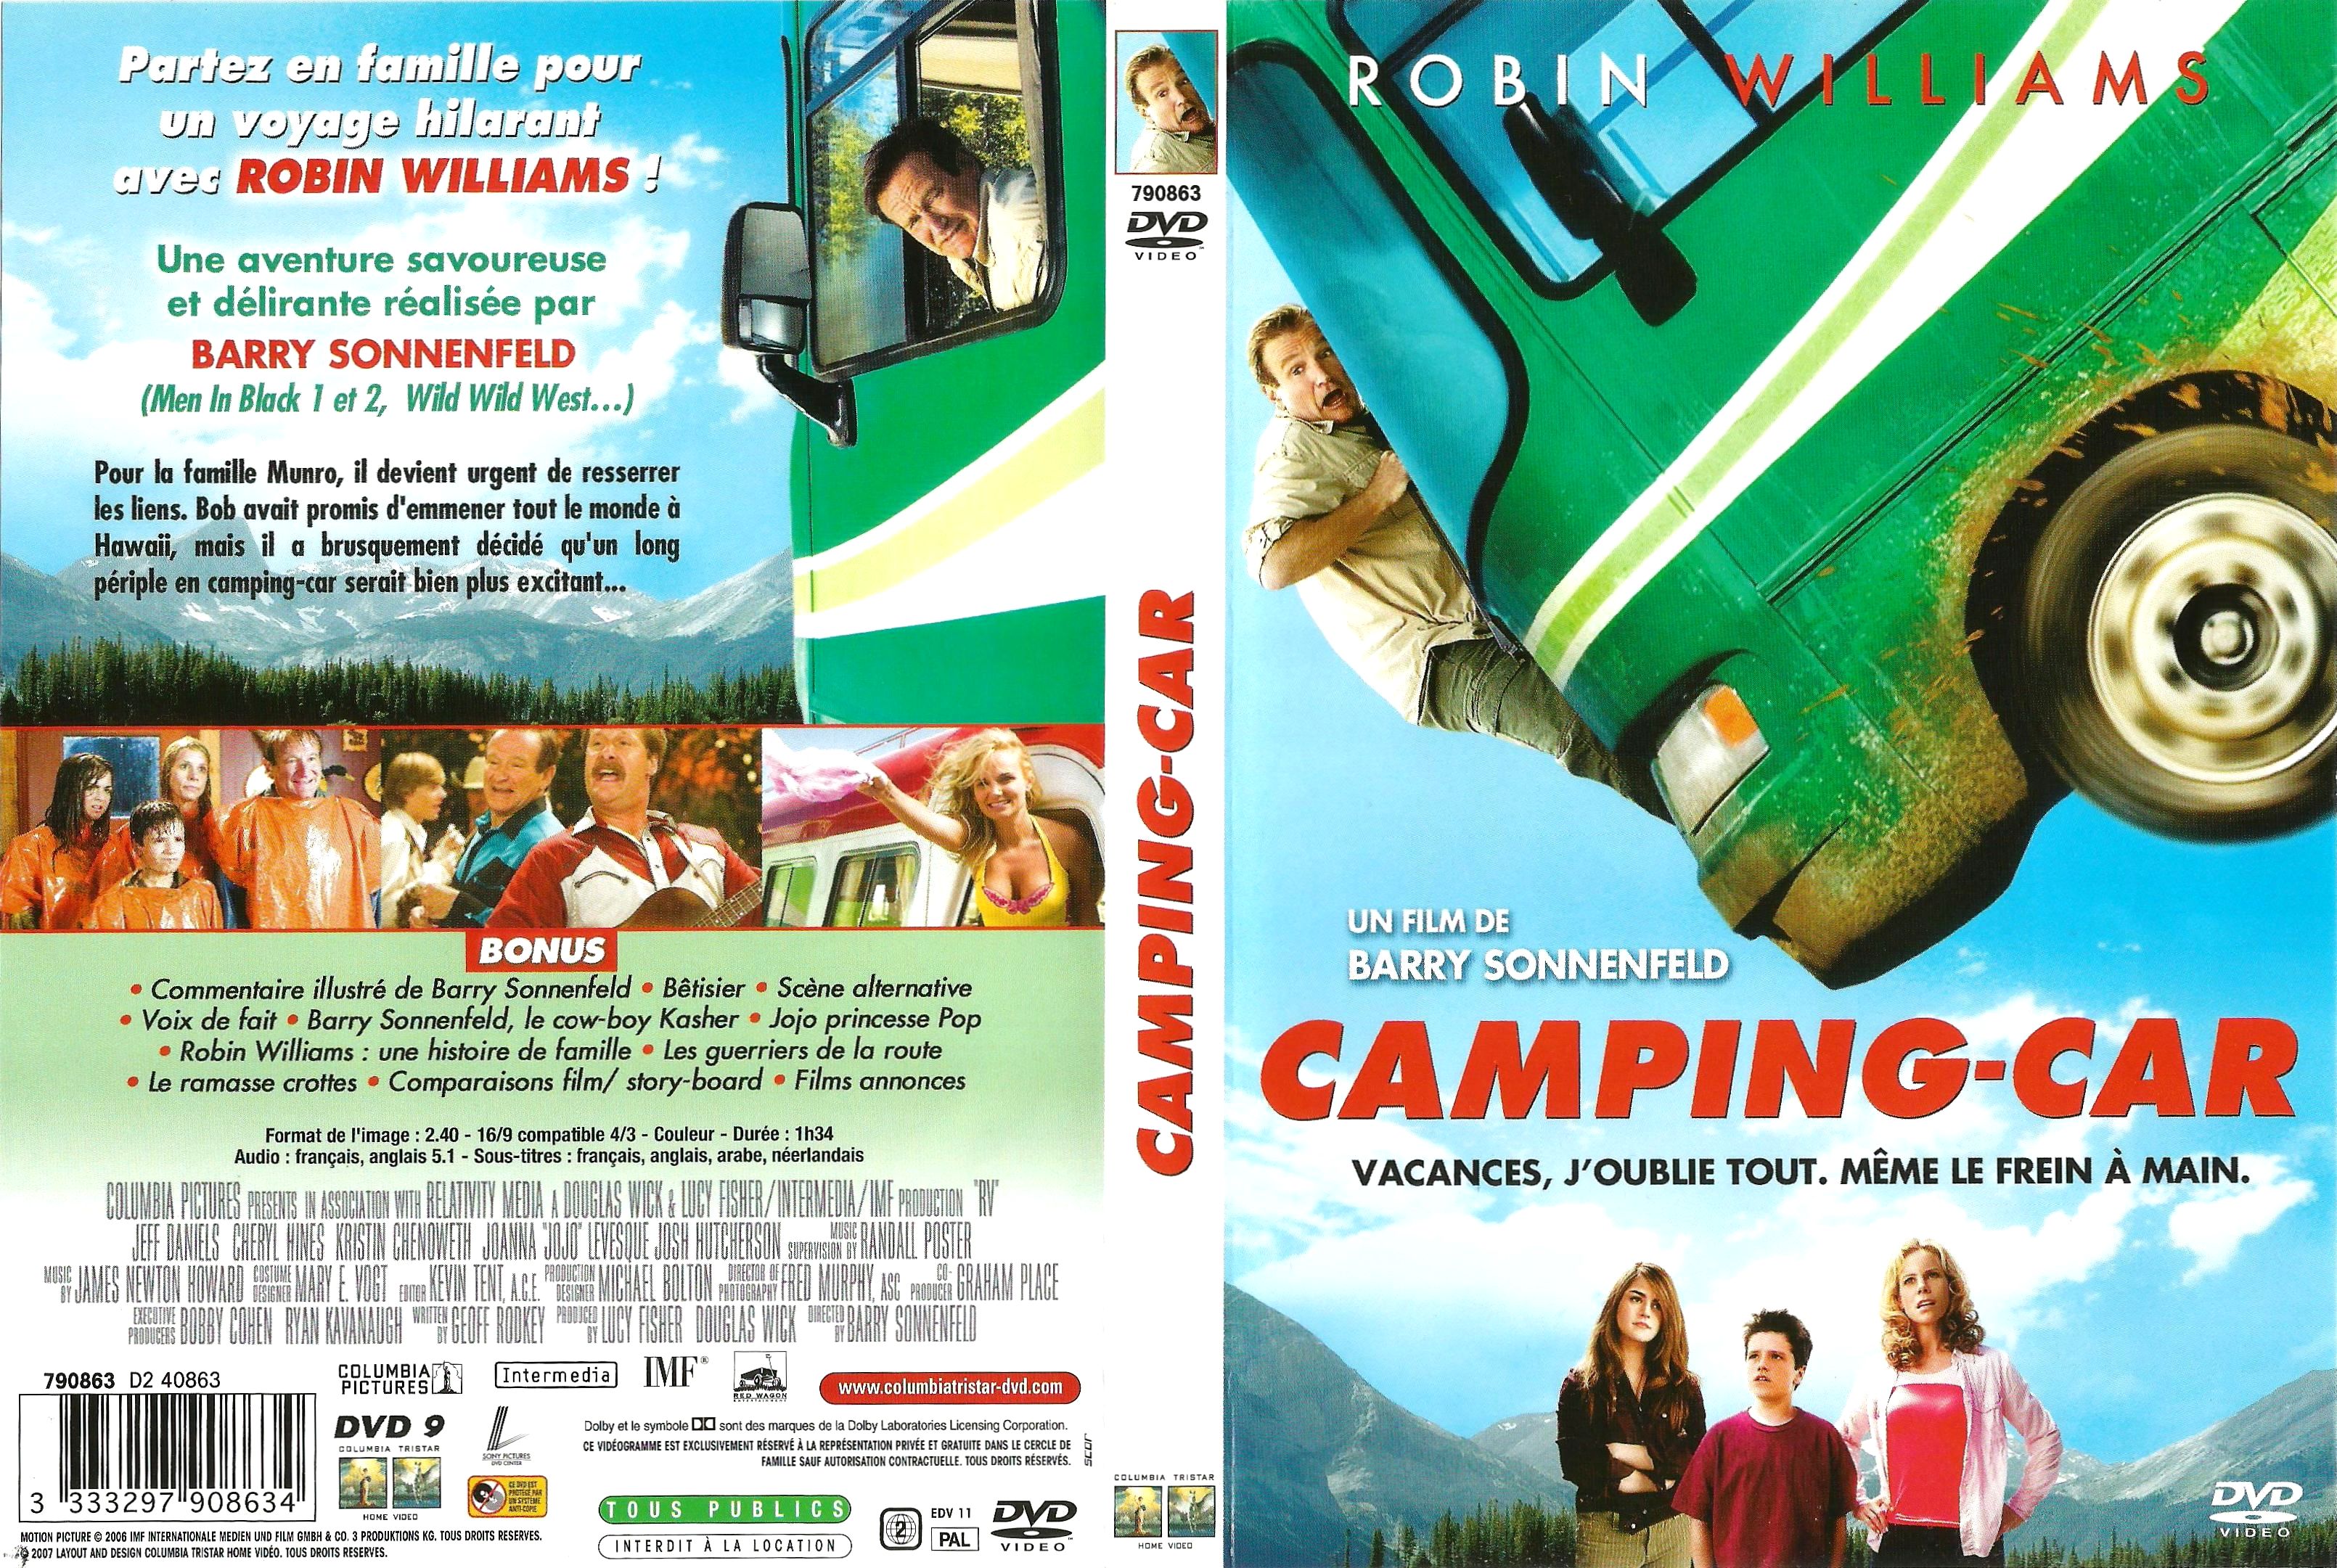 Jaquette DVD Camping-car v3